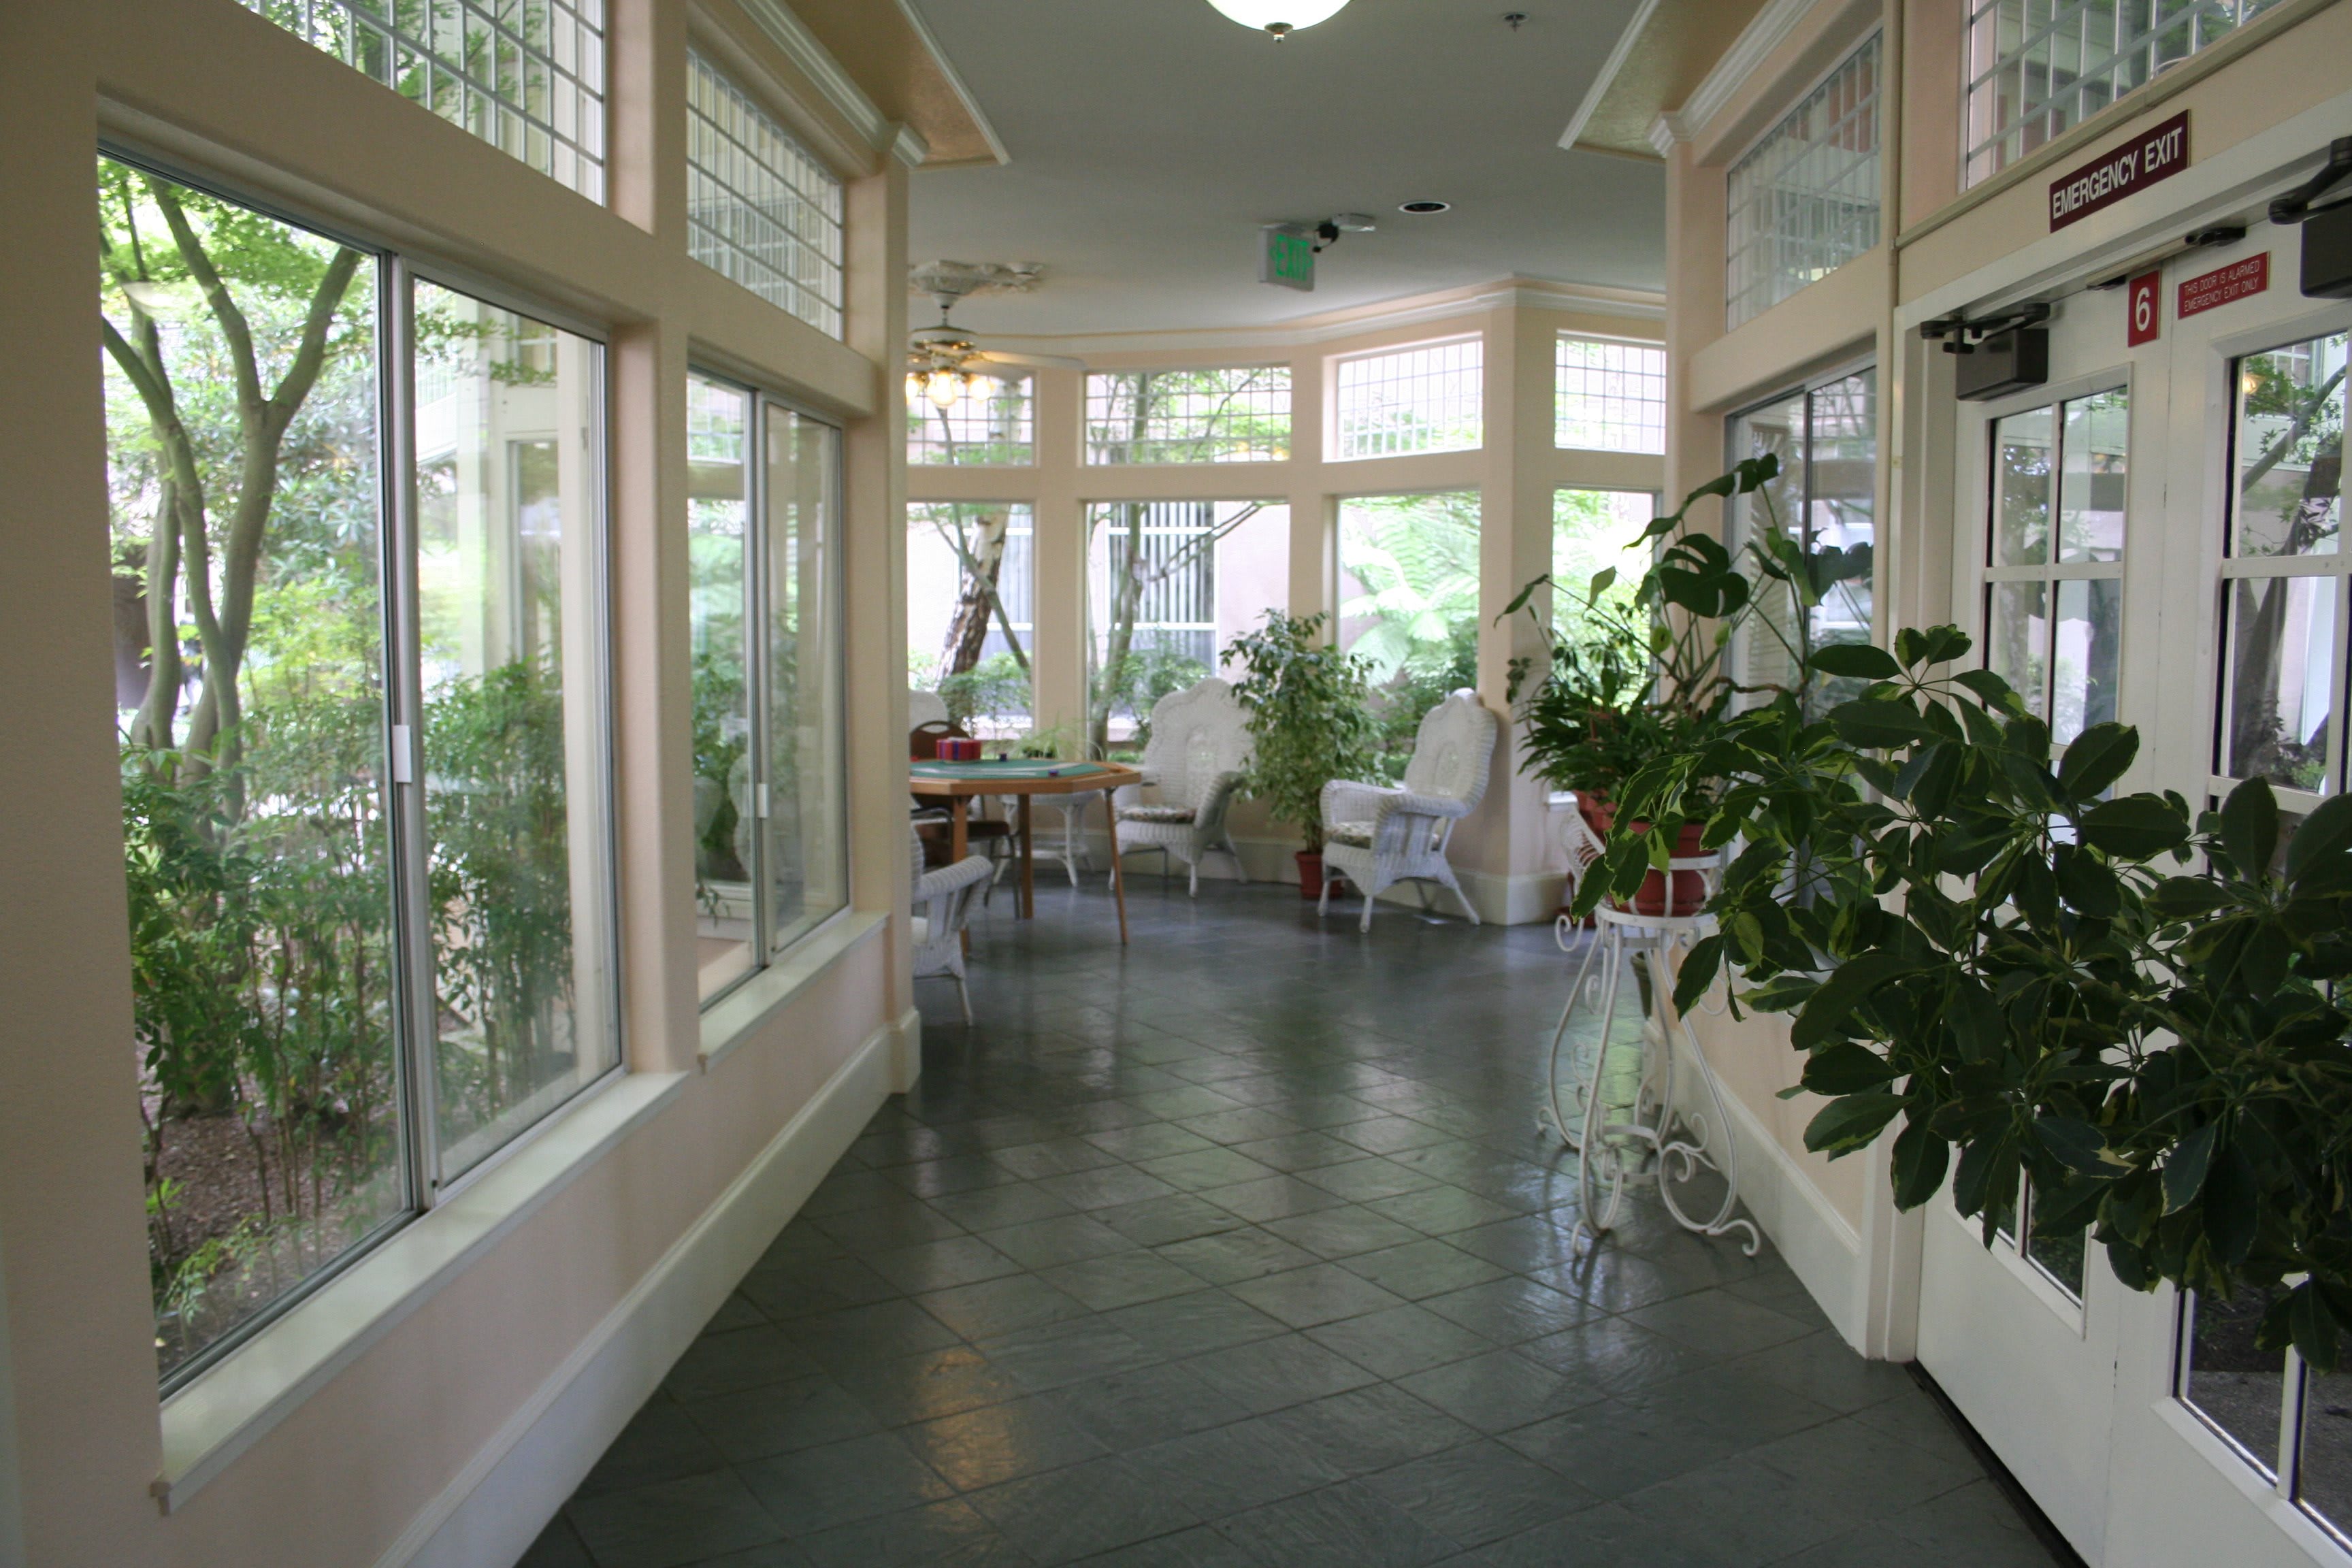 Sunshine Villa, A Merrill Gardens Community indoor common area